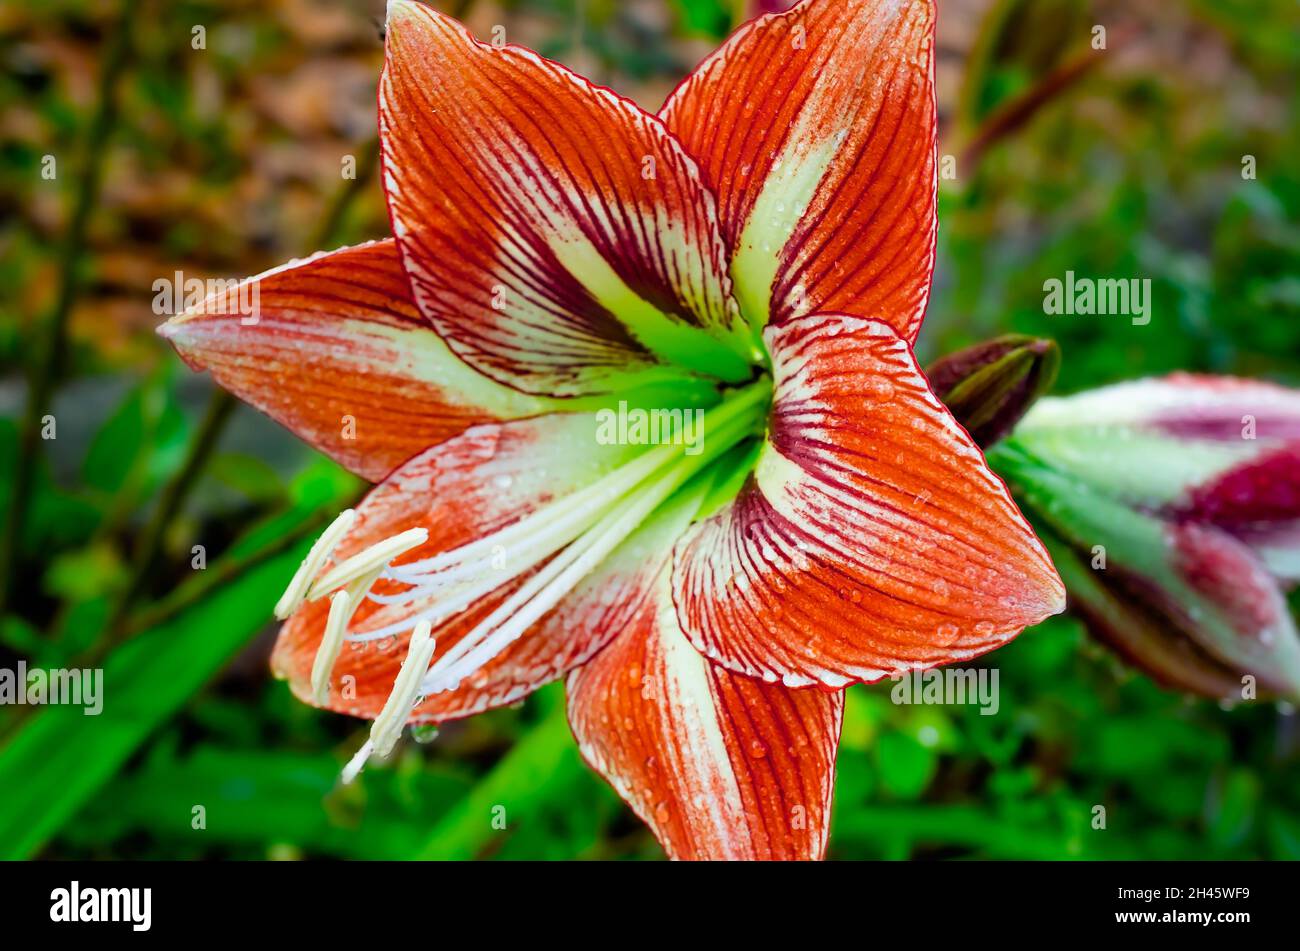 Hippeastrum Amaryllis Barbados Red & White Winter Indoor Perennial Flower Bulb